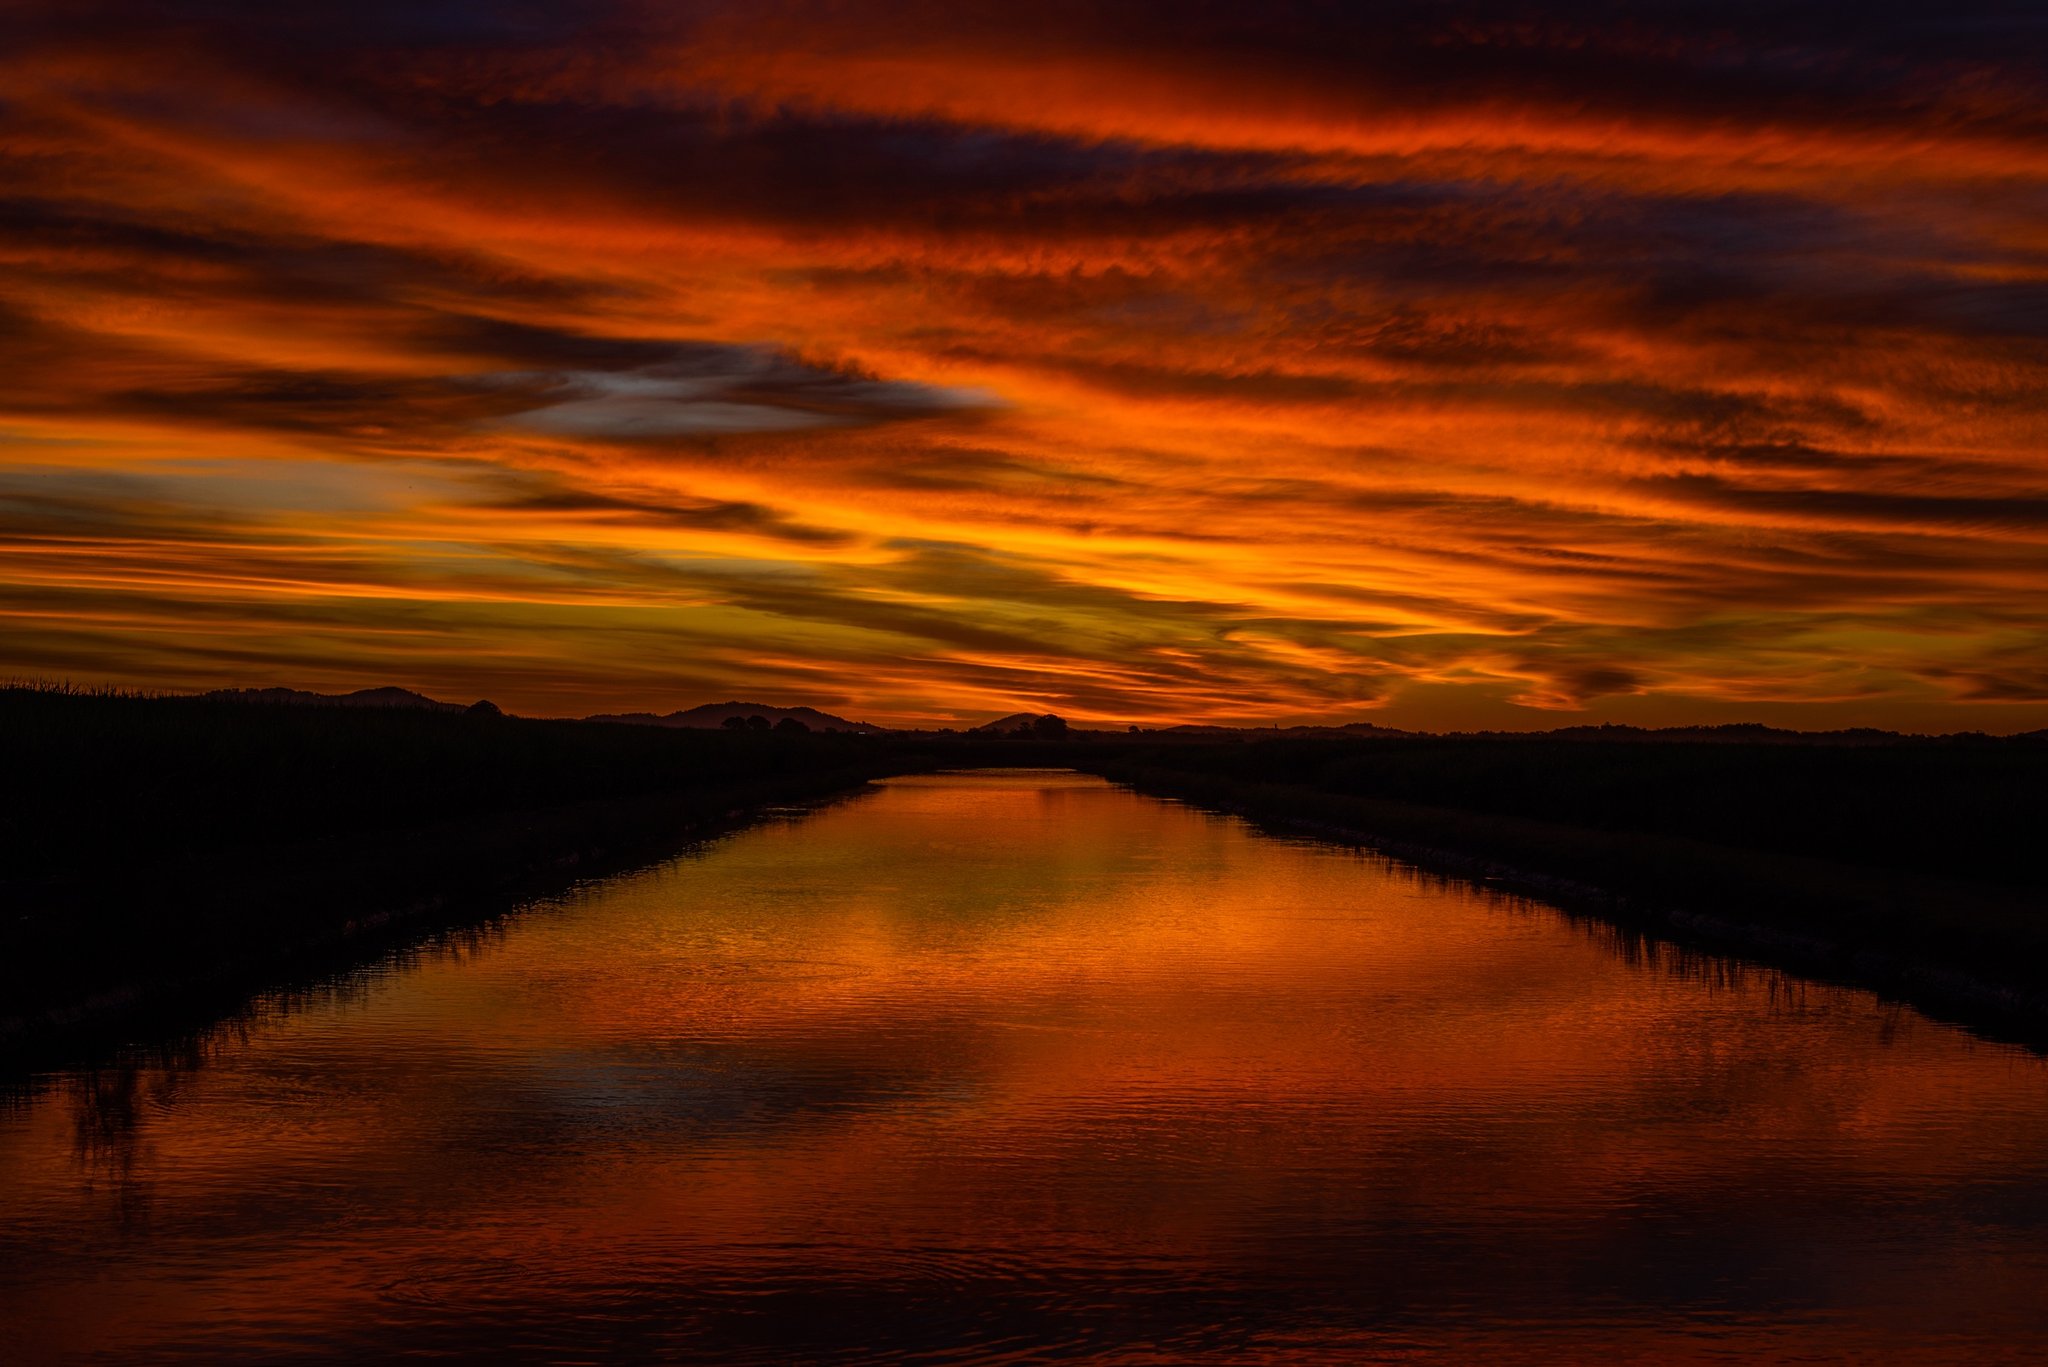 Sunset over Norwell in Australia by Glen Anderson @Gleno_